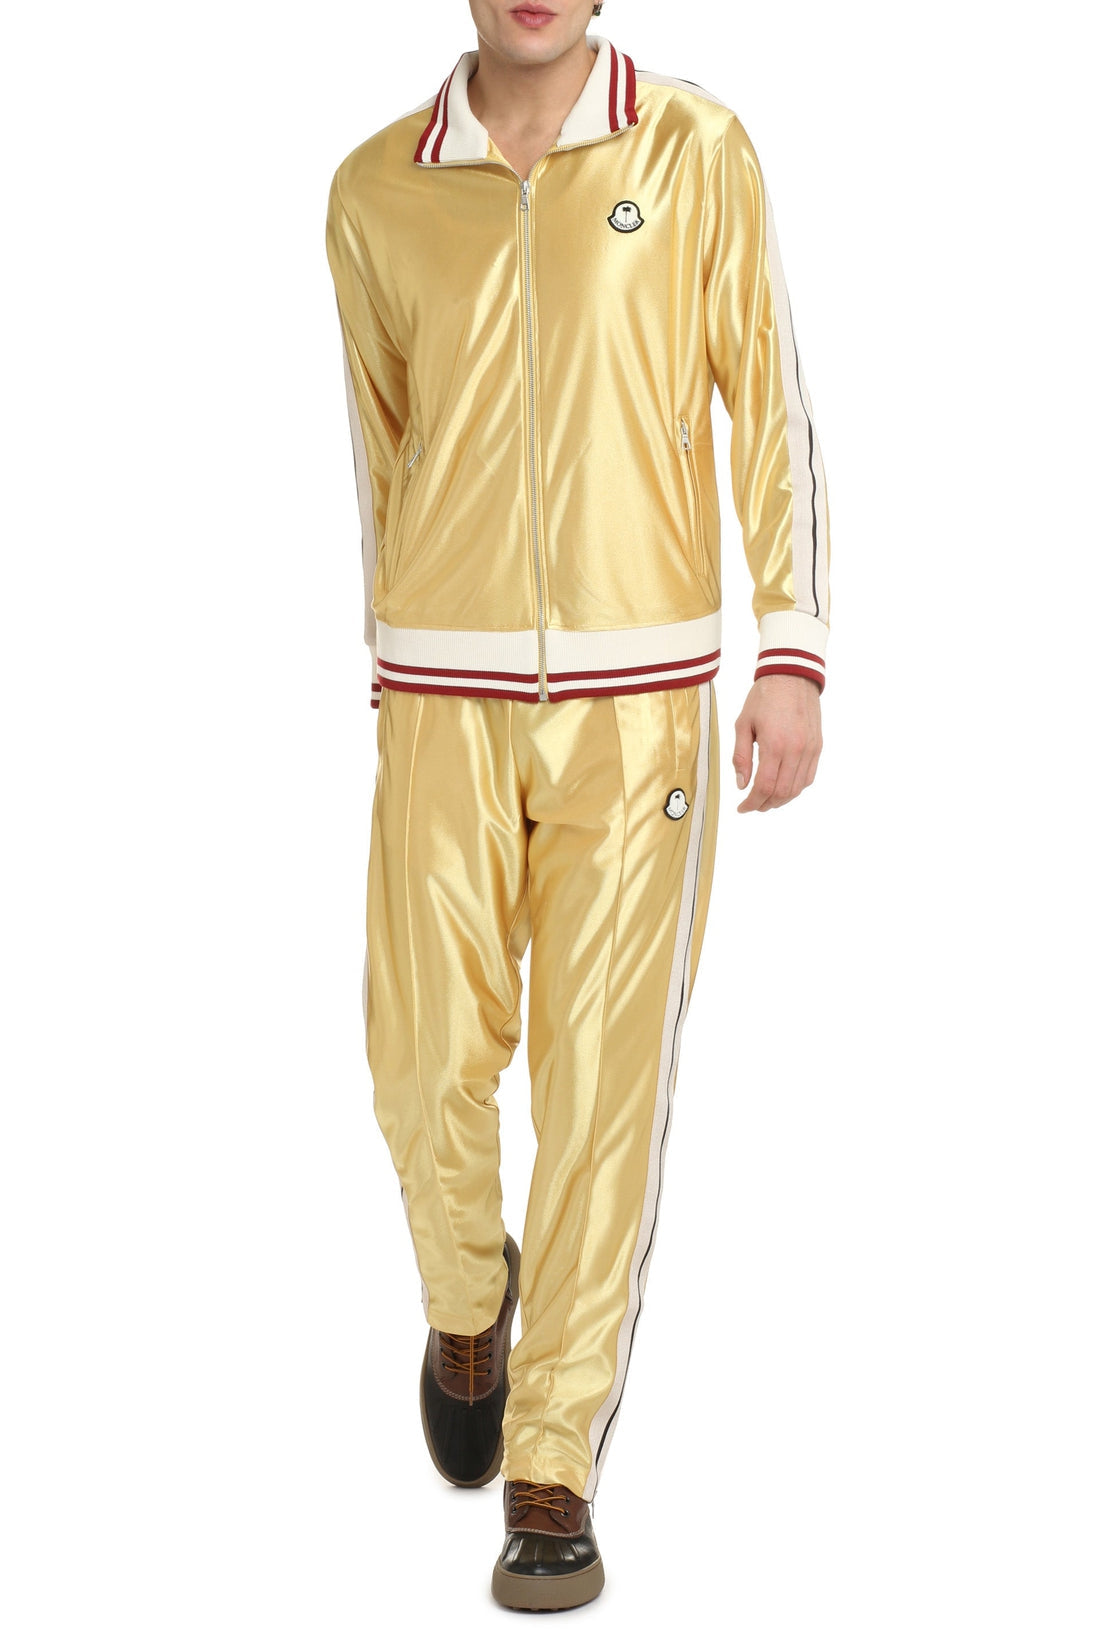 Moncler Genius-OUTLET-SALE-8 Moncler Palm Angels - Full zip sweatshirt with side stripes-ARCHIVIST